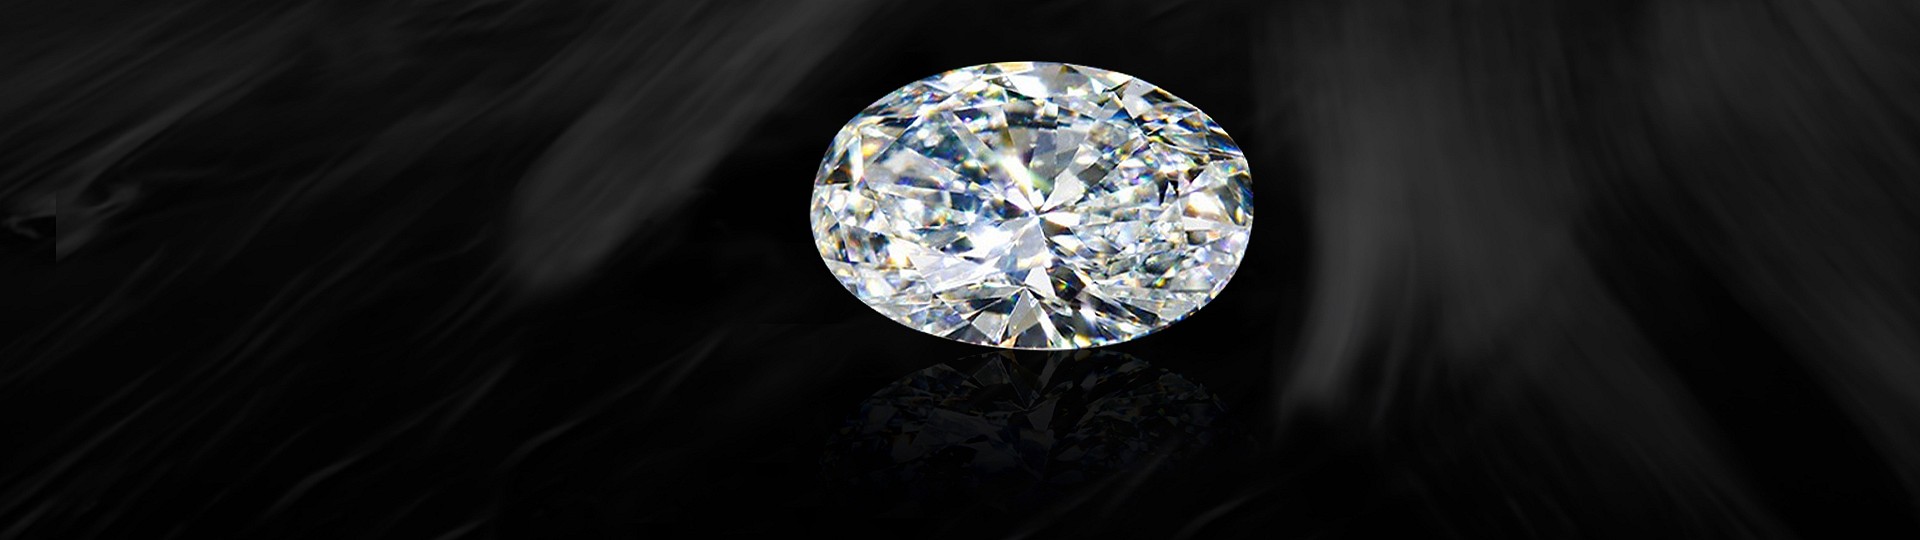 "Creme De La Creme" Investment GIA Diamonds by Bid Global International Auctioneers LLC